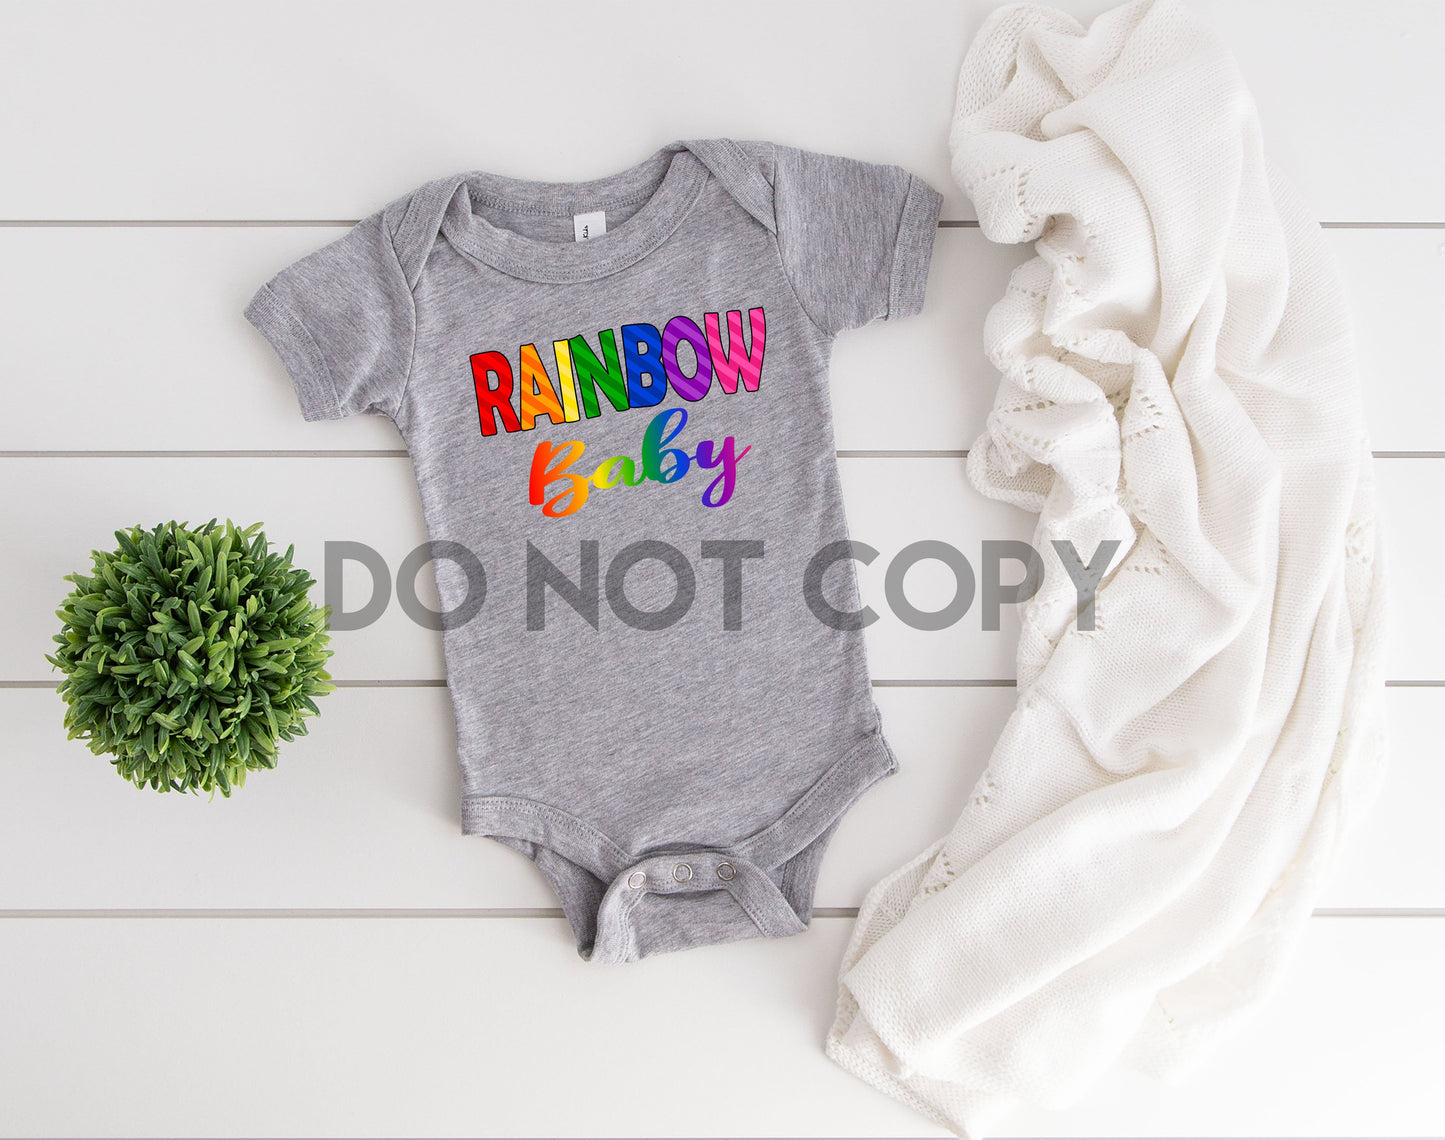 Rainbow Baby Dream Print or Sublimation Print